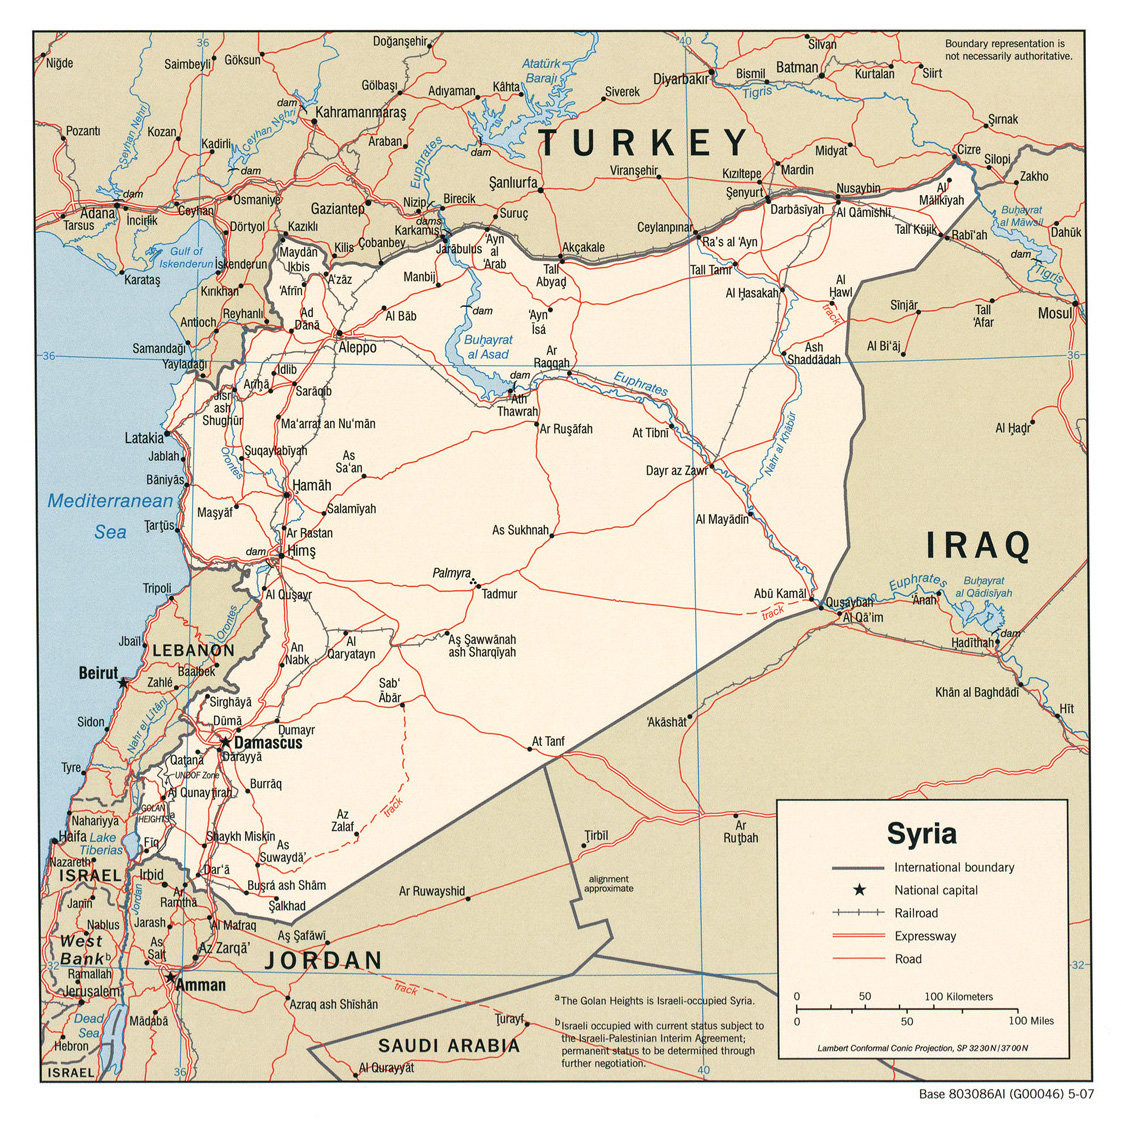 http://www.lib.utexas.edu/maps/middle_east_and_asia/syria_pol_2007.jpg